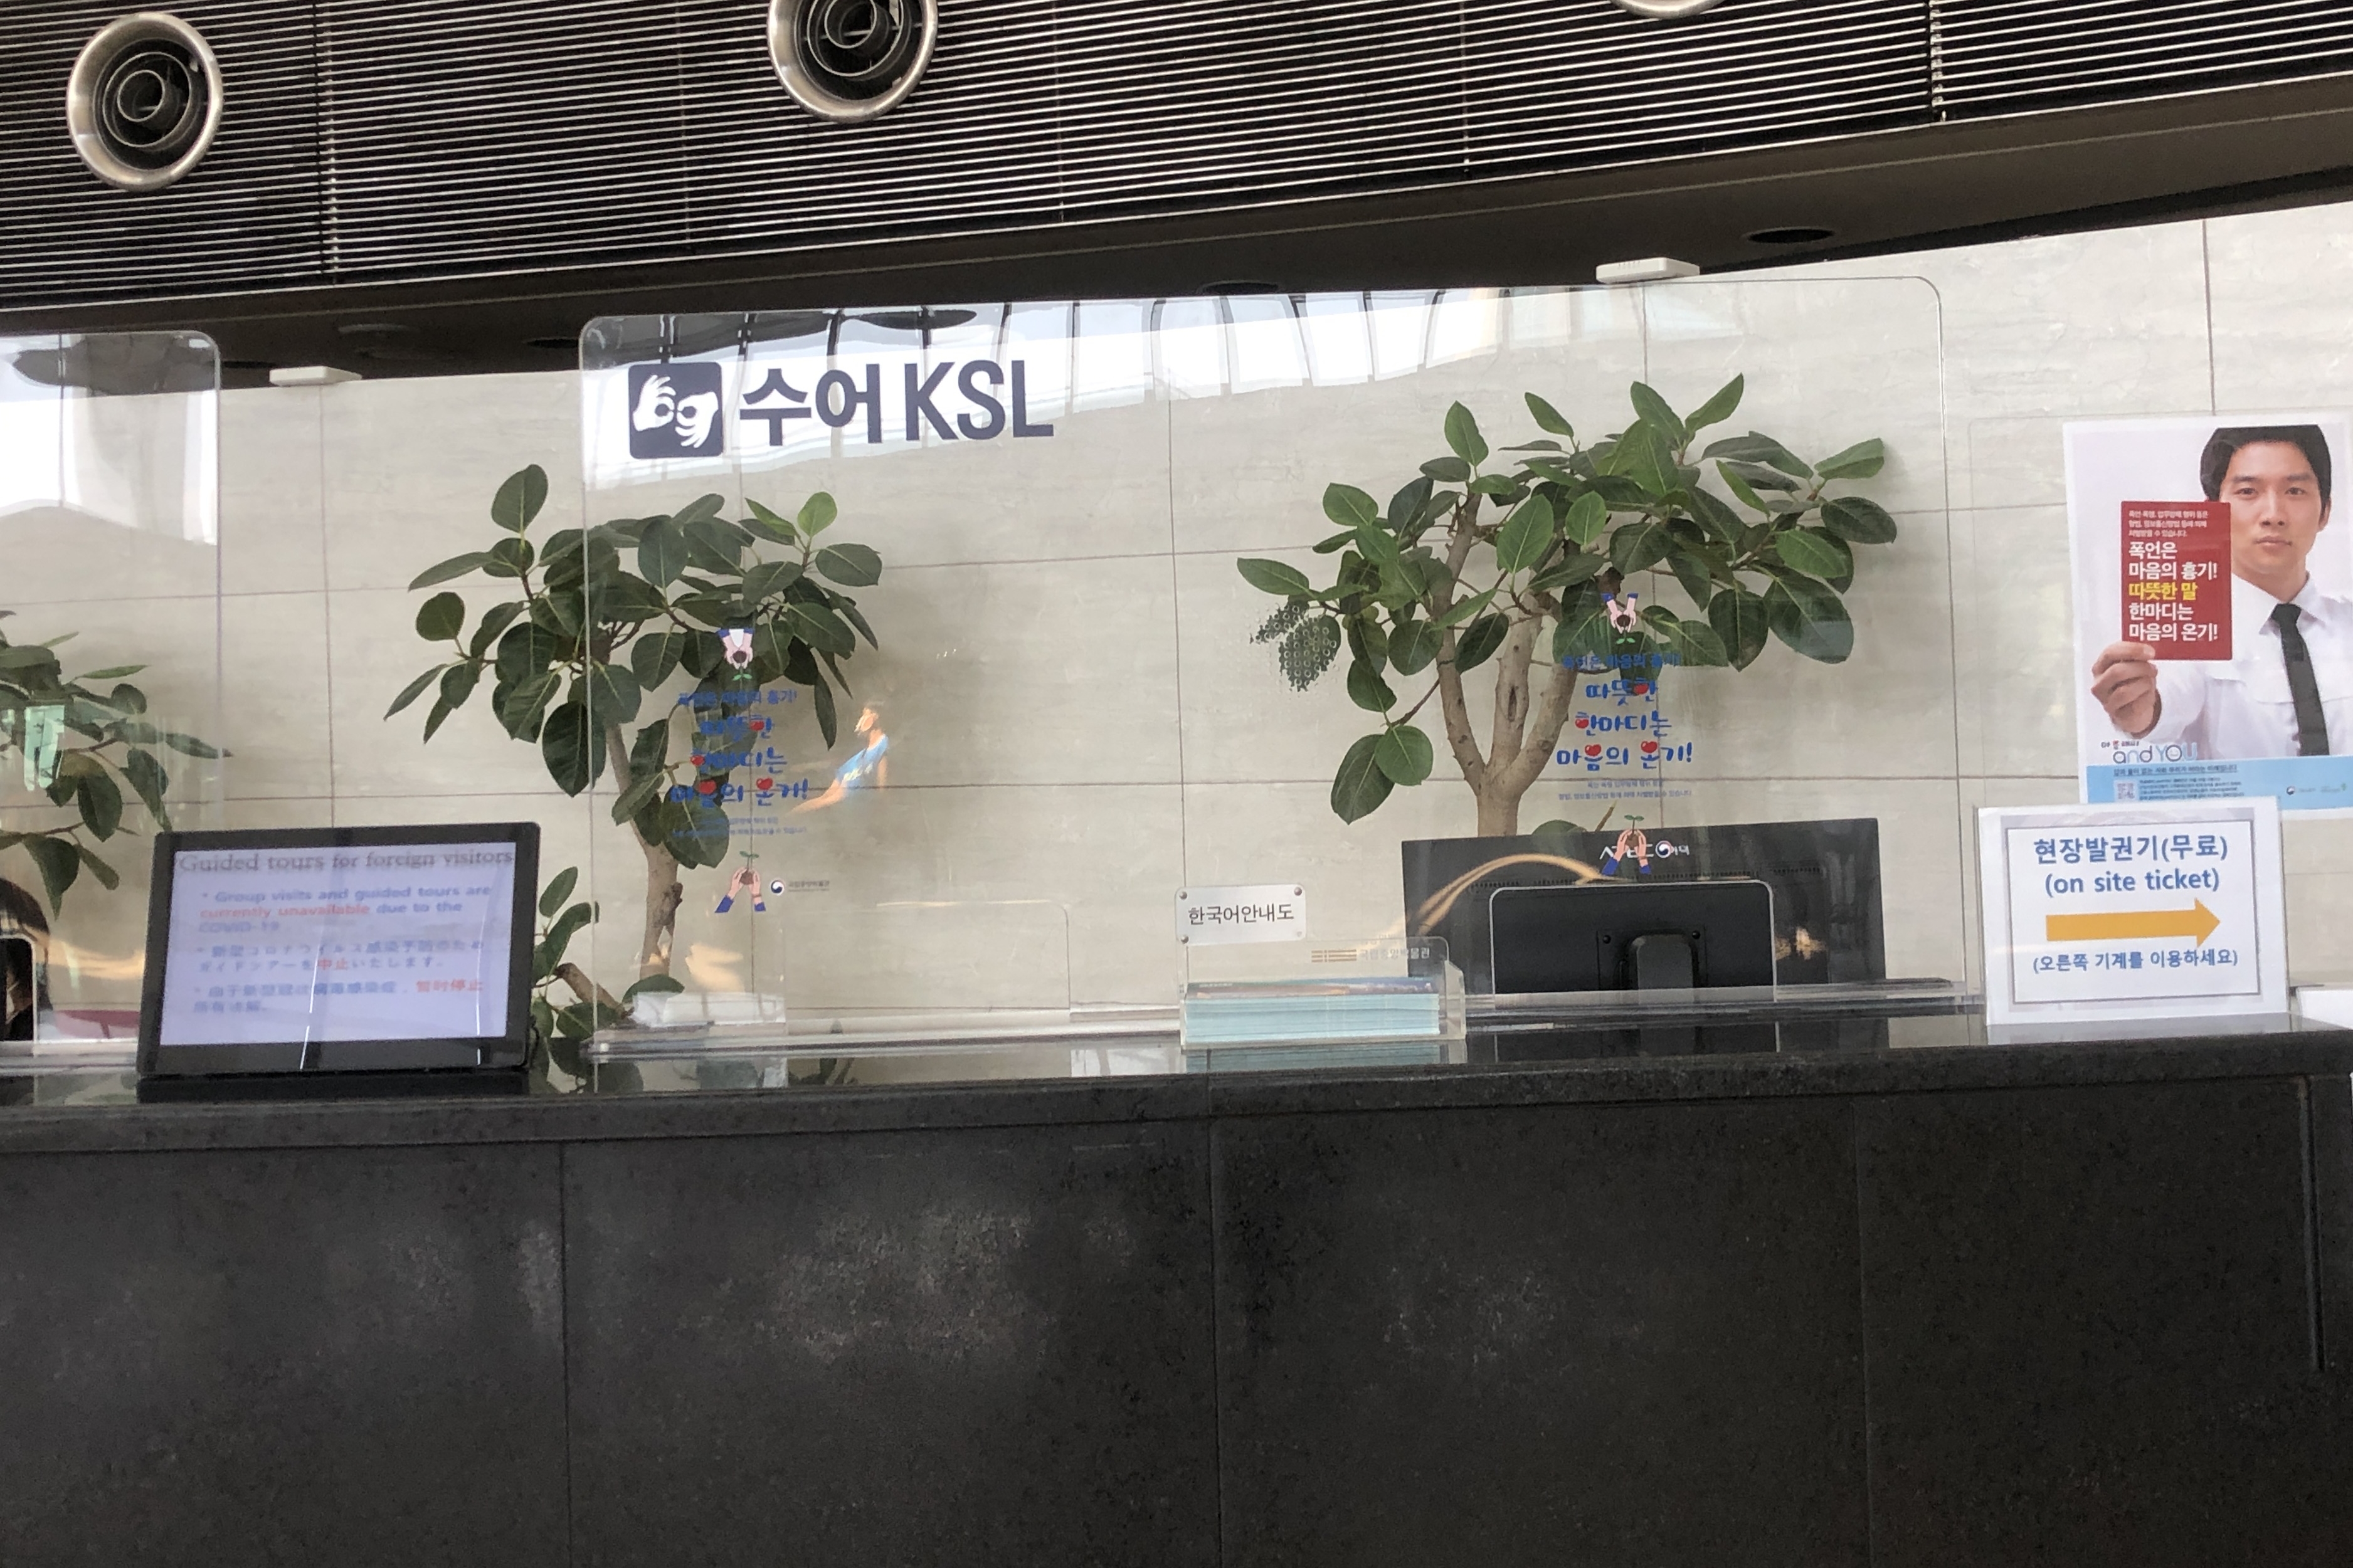 Information desk/ Information board0 : Information desk providing Korean sign language consultation services 
